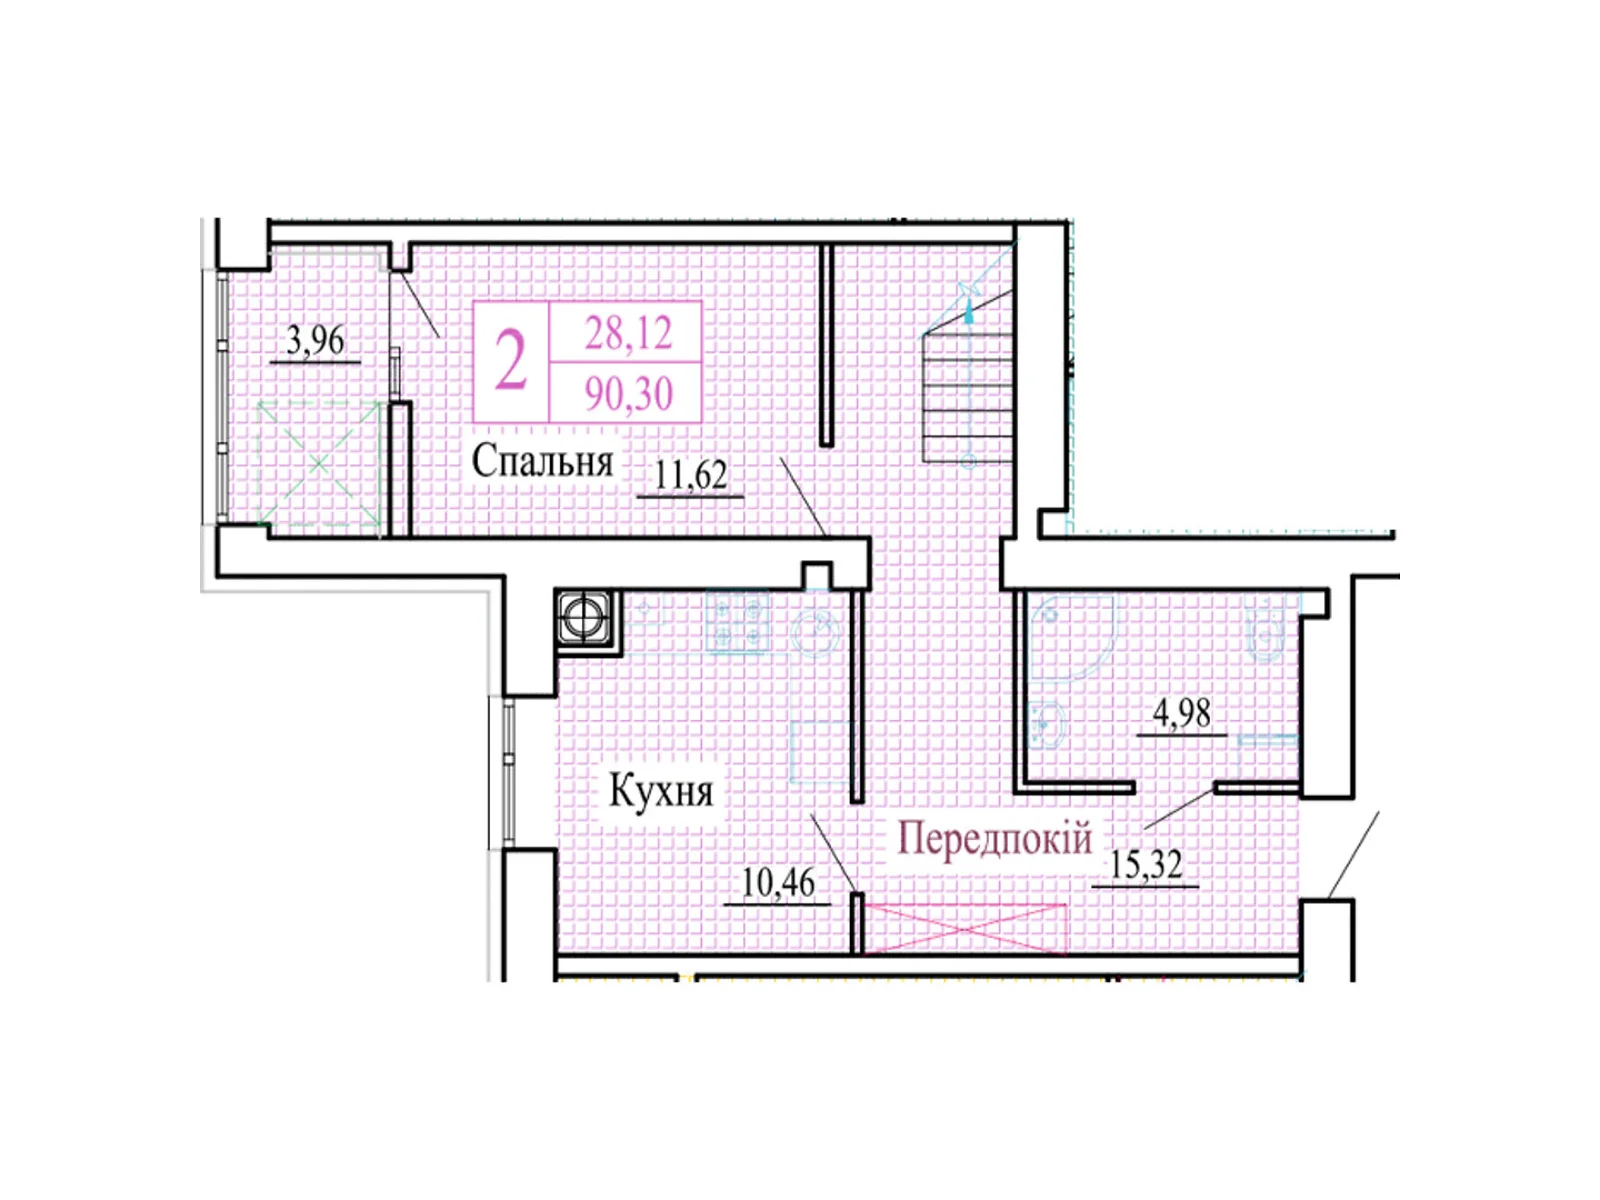 2-кімнатна квартира 90.3 кв. м у Луцьку, цена: 72330 $